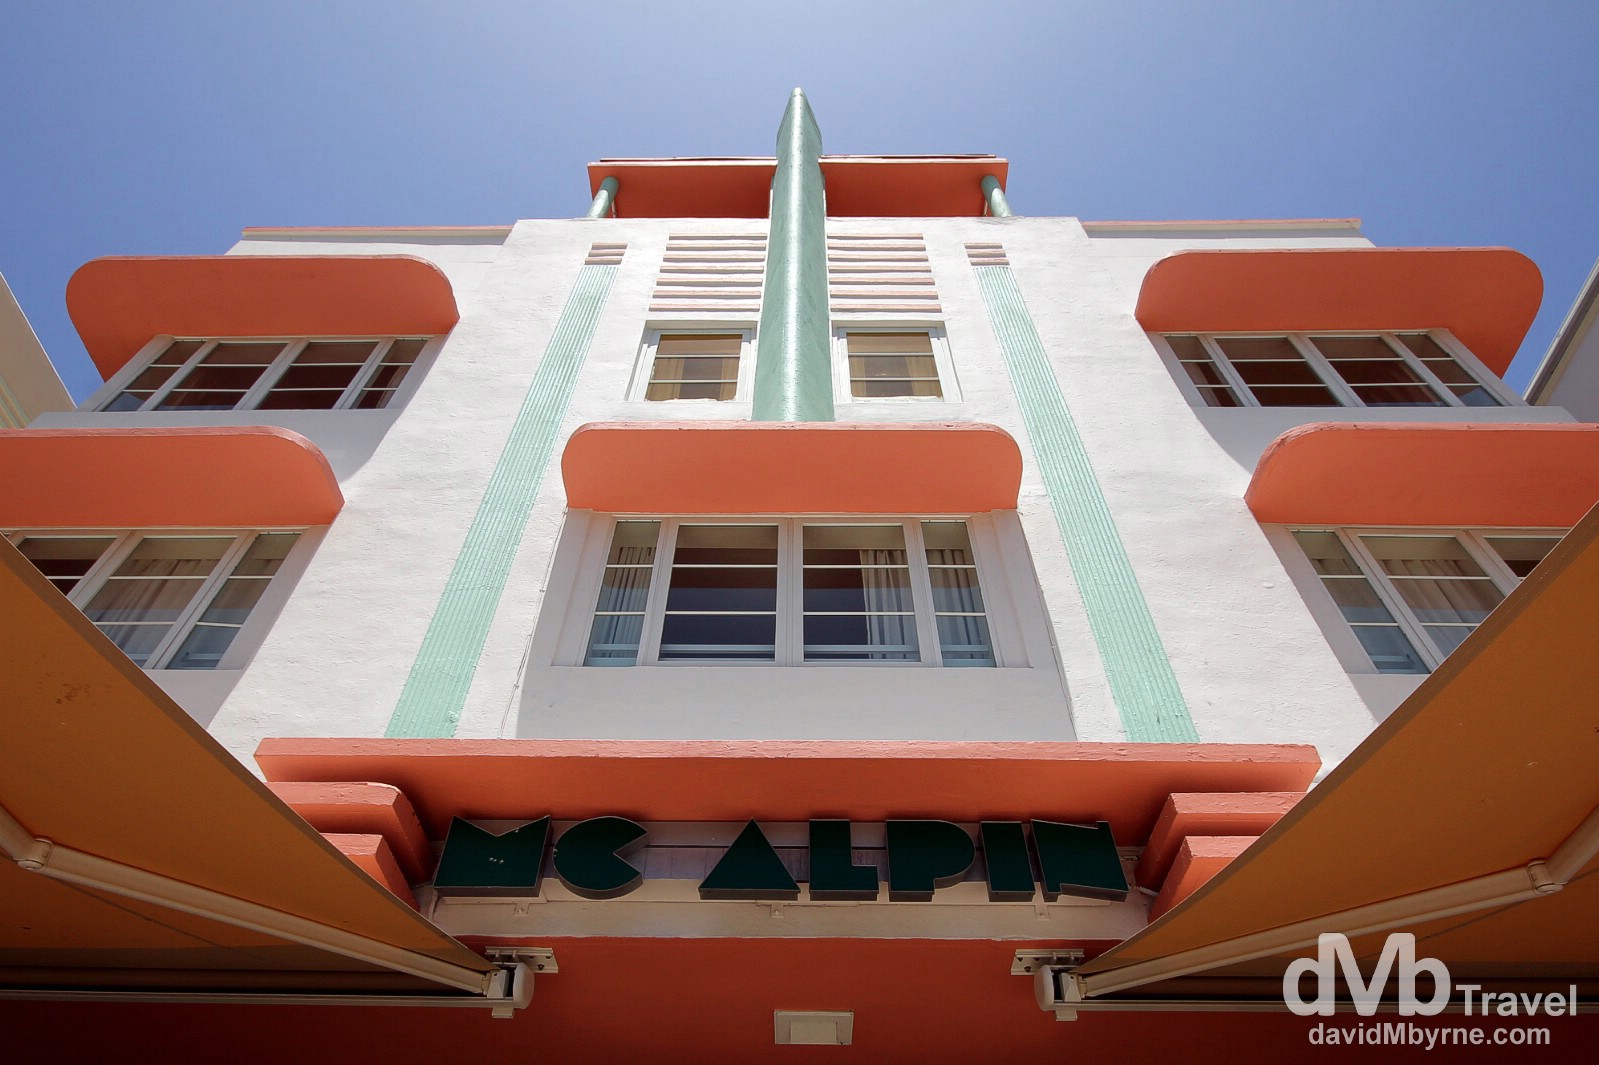 The Mc Alpin Hotel, Ocean Drive, Miami, Florida, USA. July 8th 2013. 